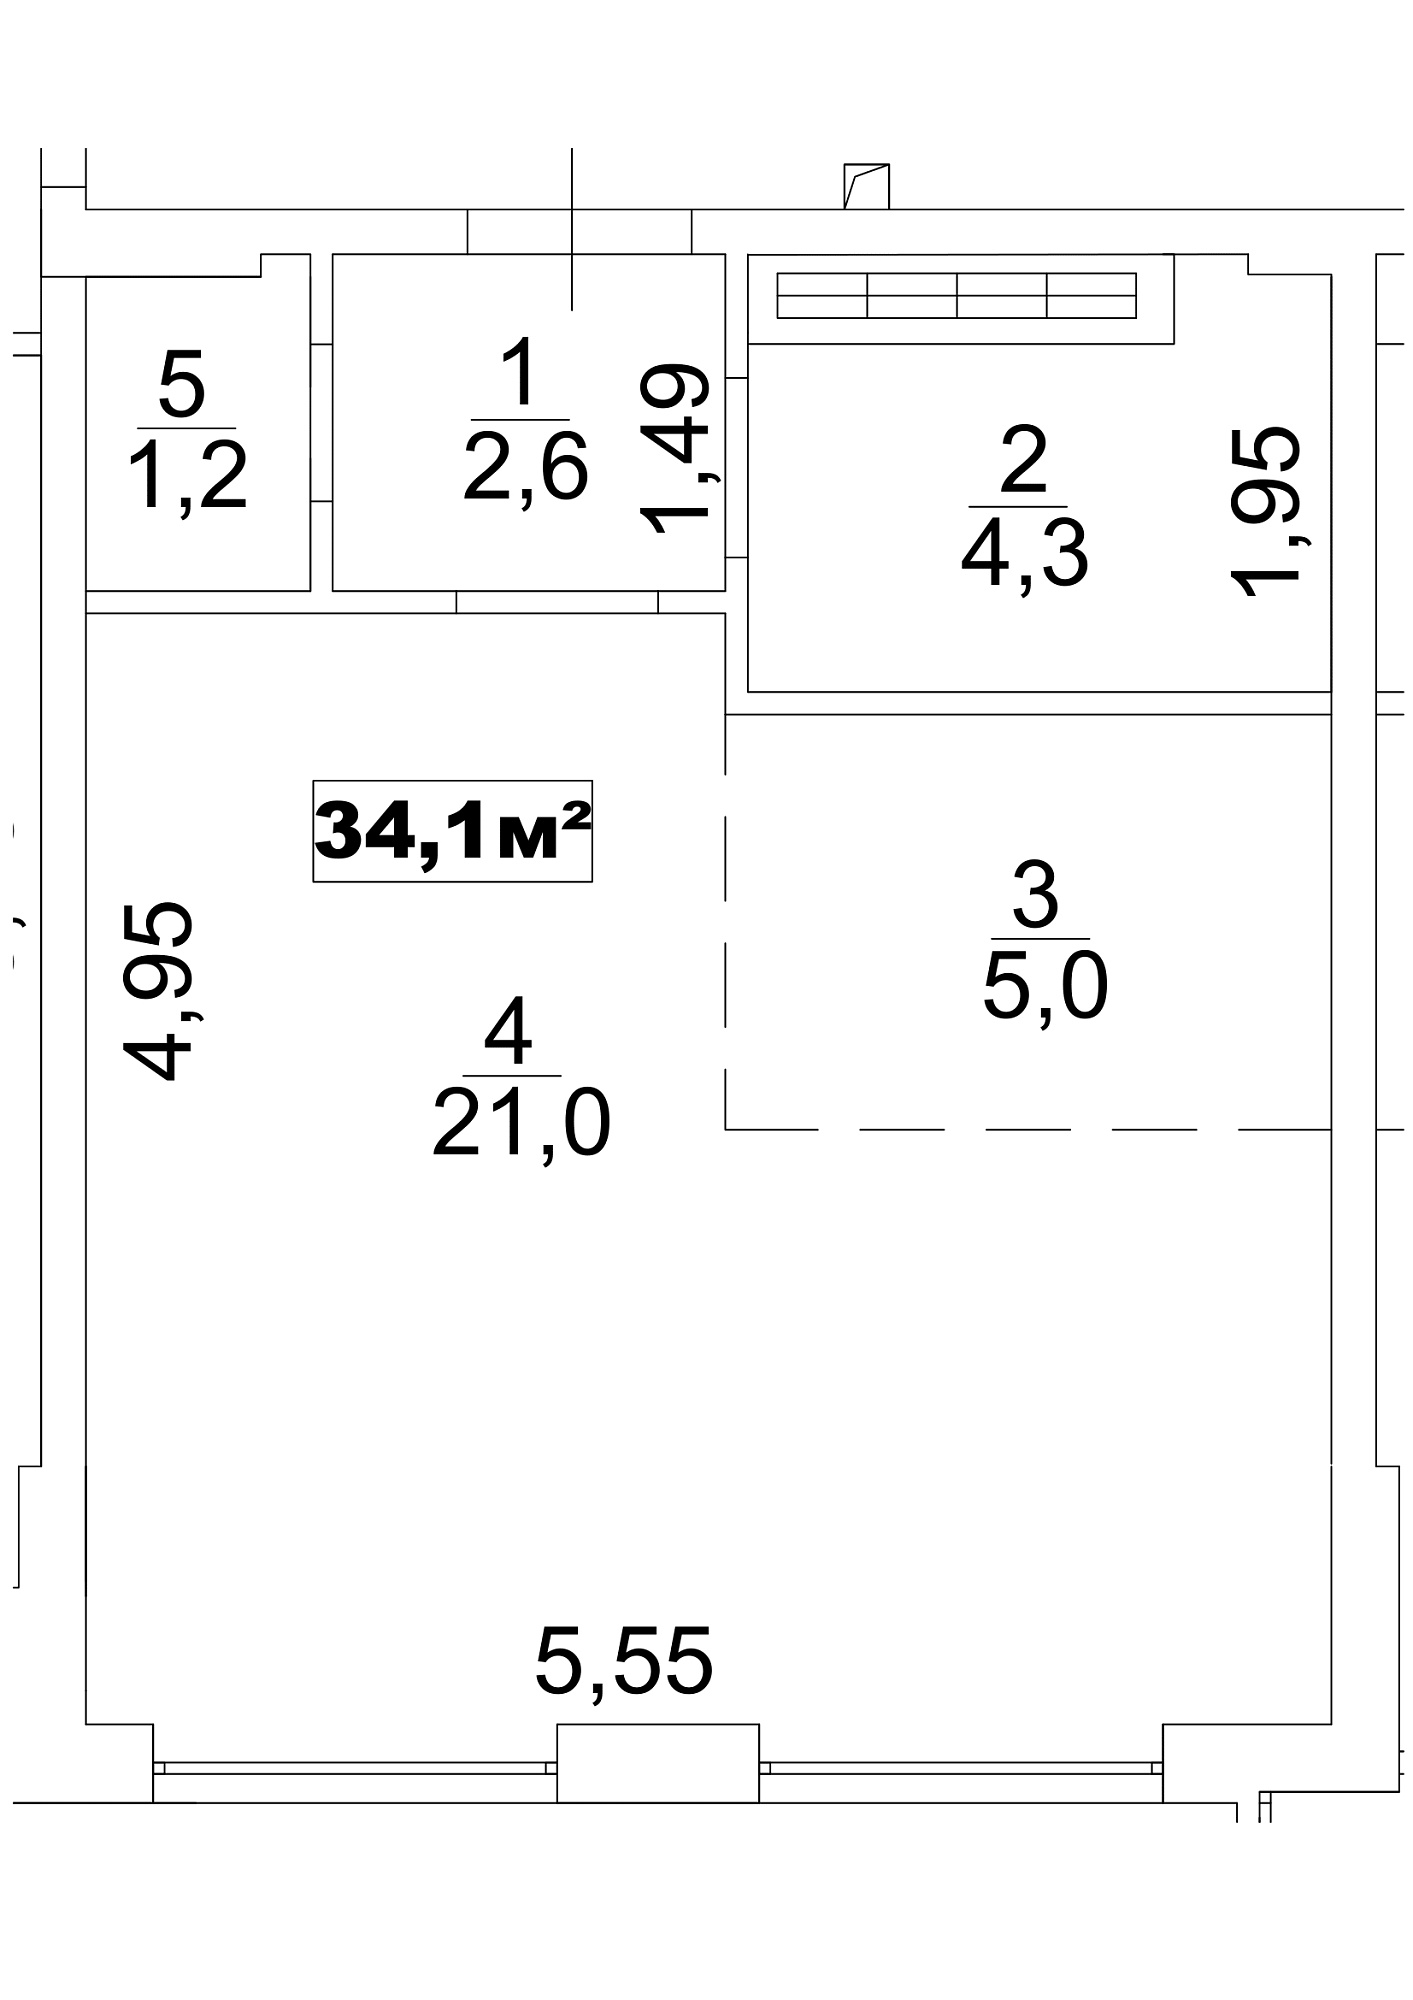 Planning Smart flats area 34.1m2, AB-13-05/00035.